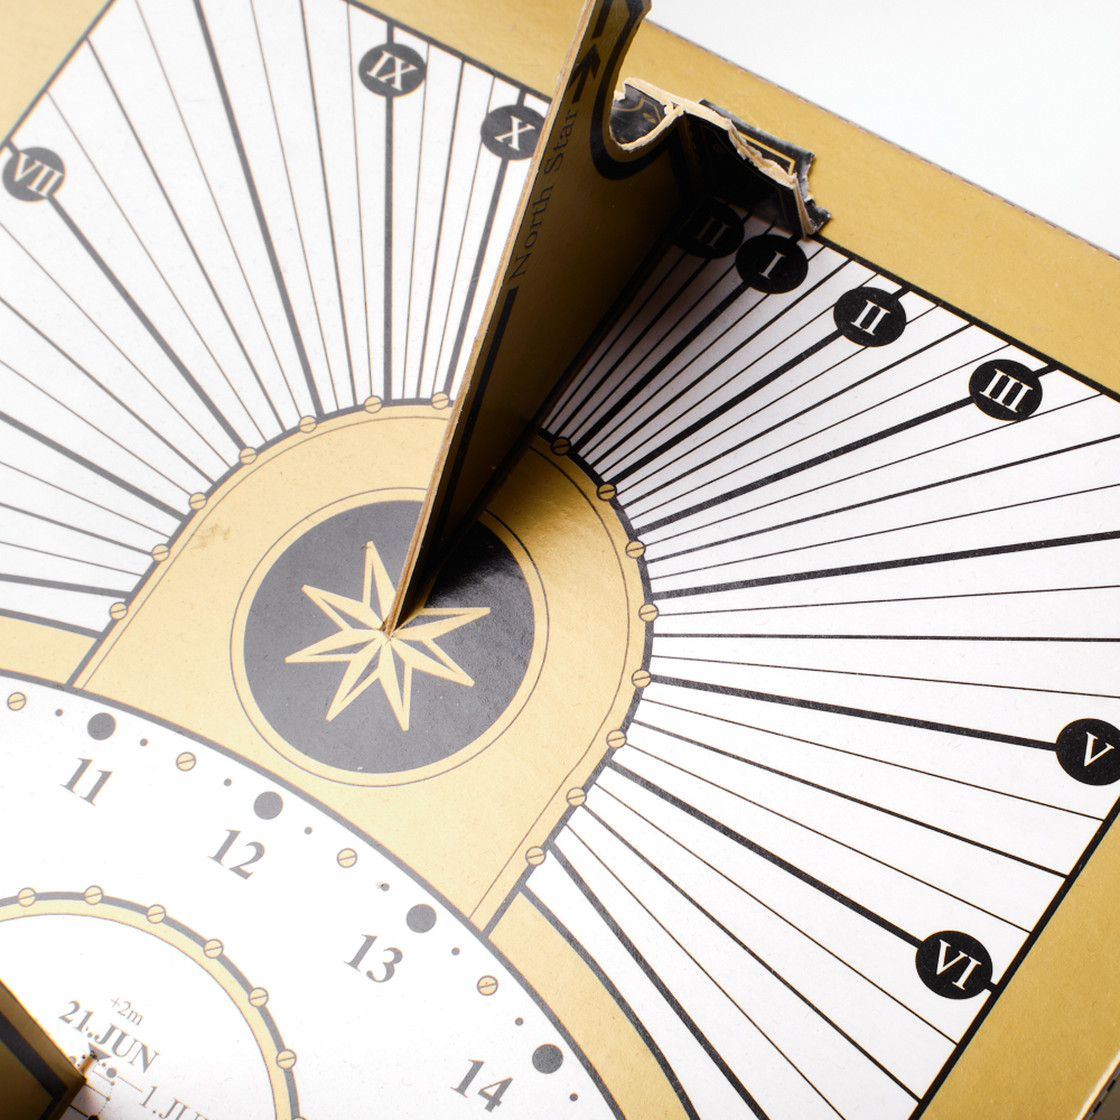 The compass sundial - AstroMedia